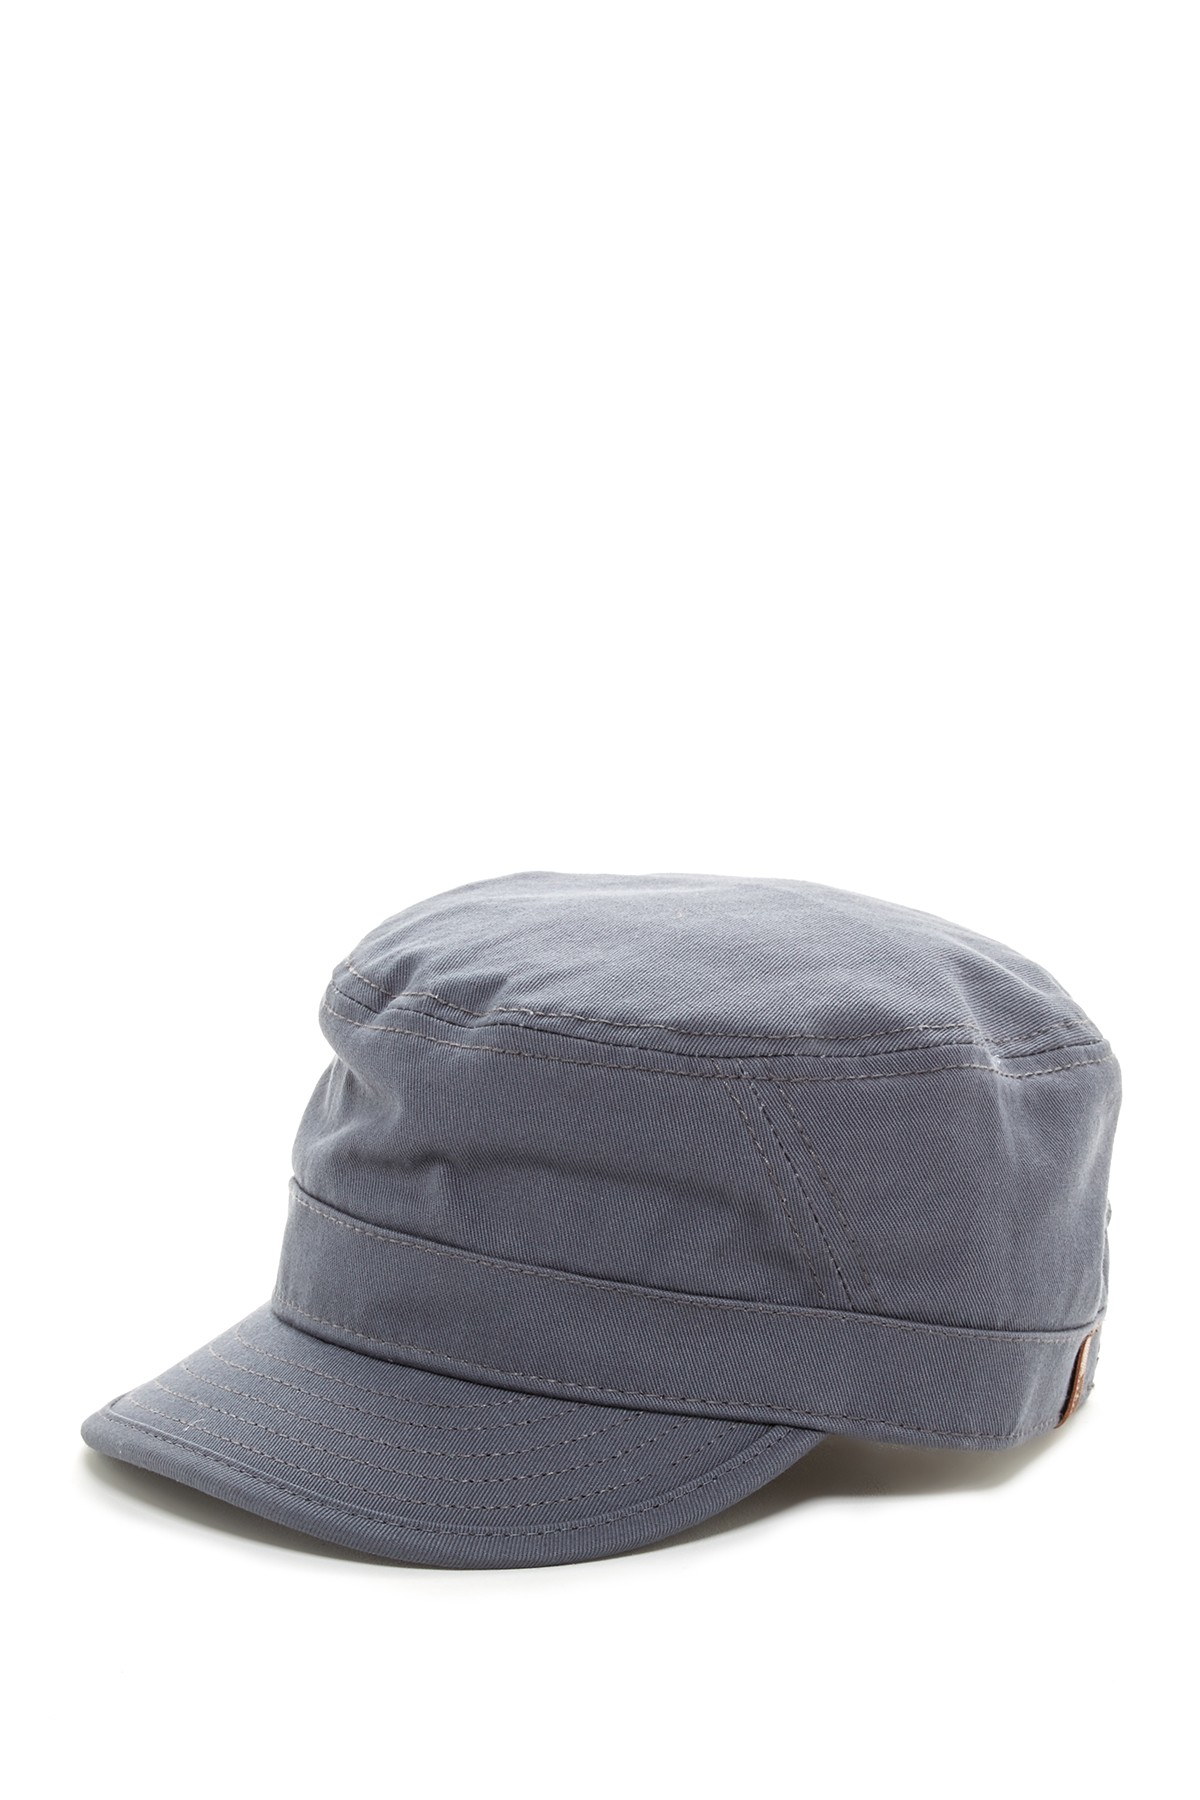 Lyst - Ben Sherman Vintage Legion Hat in Gray for Men